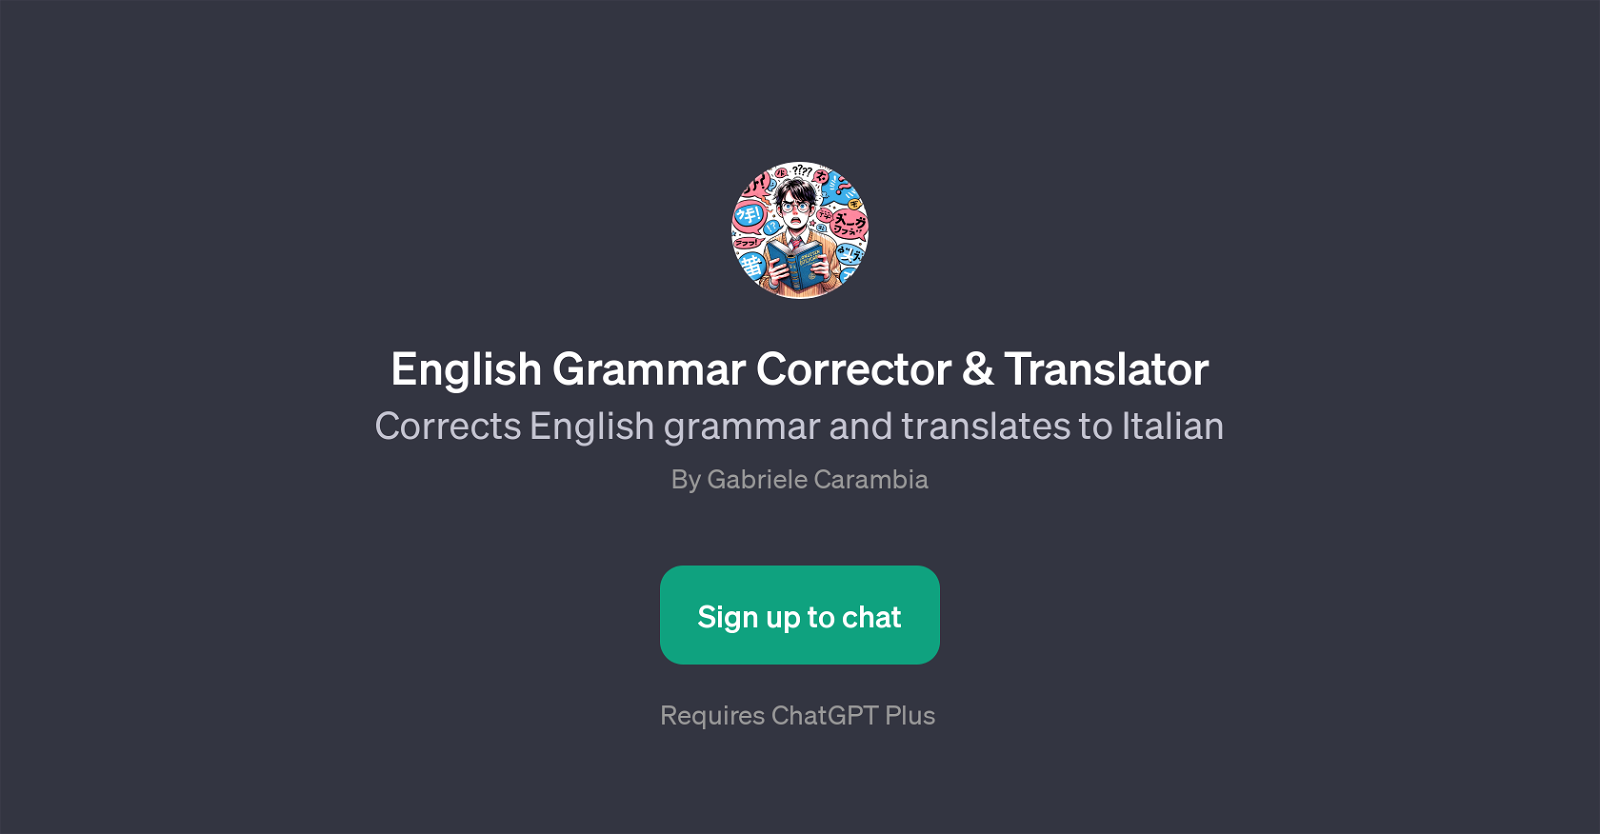 English Grammar Corrector & Translator website